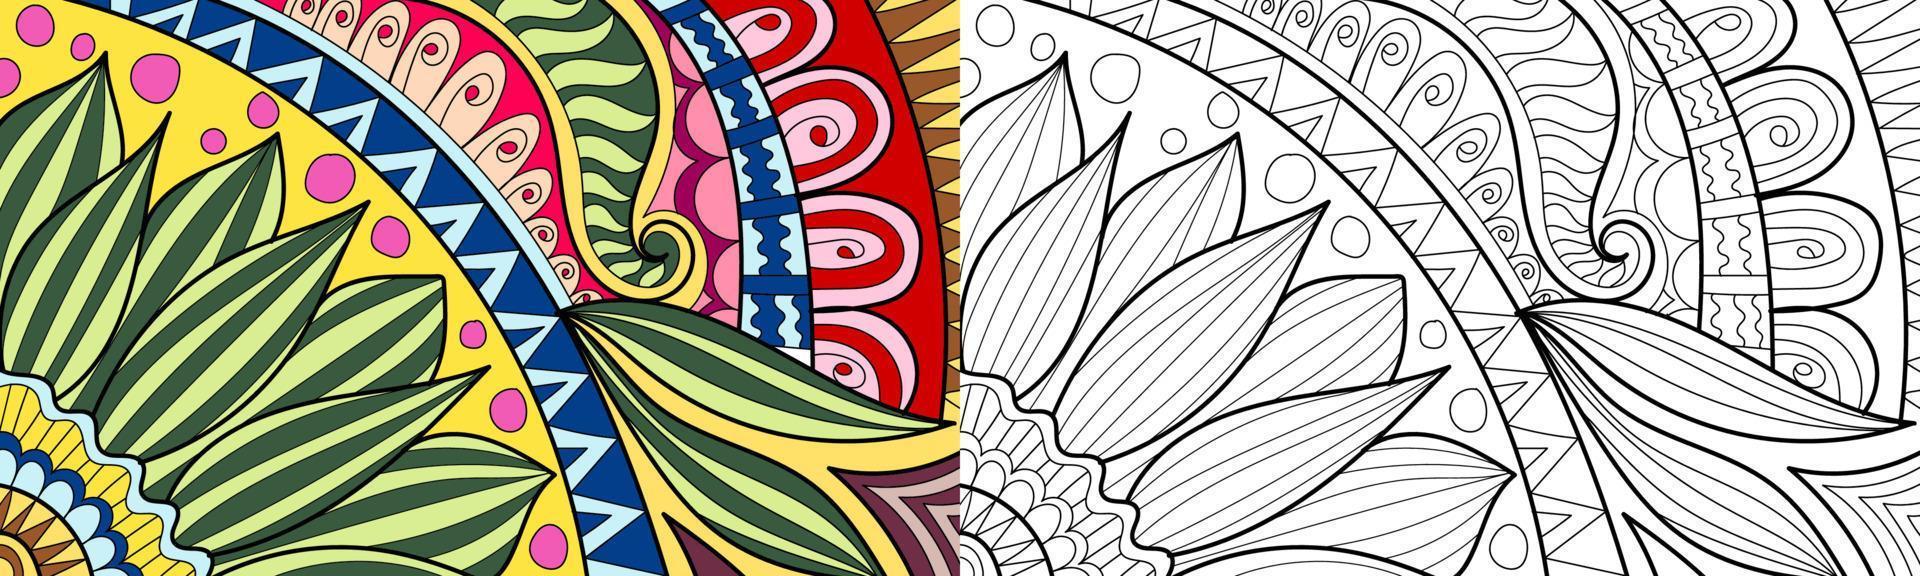 Decorative henna mehndi style design coloring book illustration vector